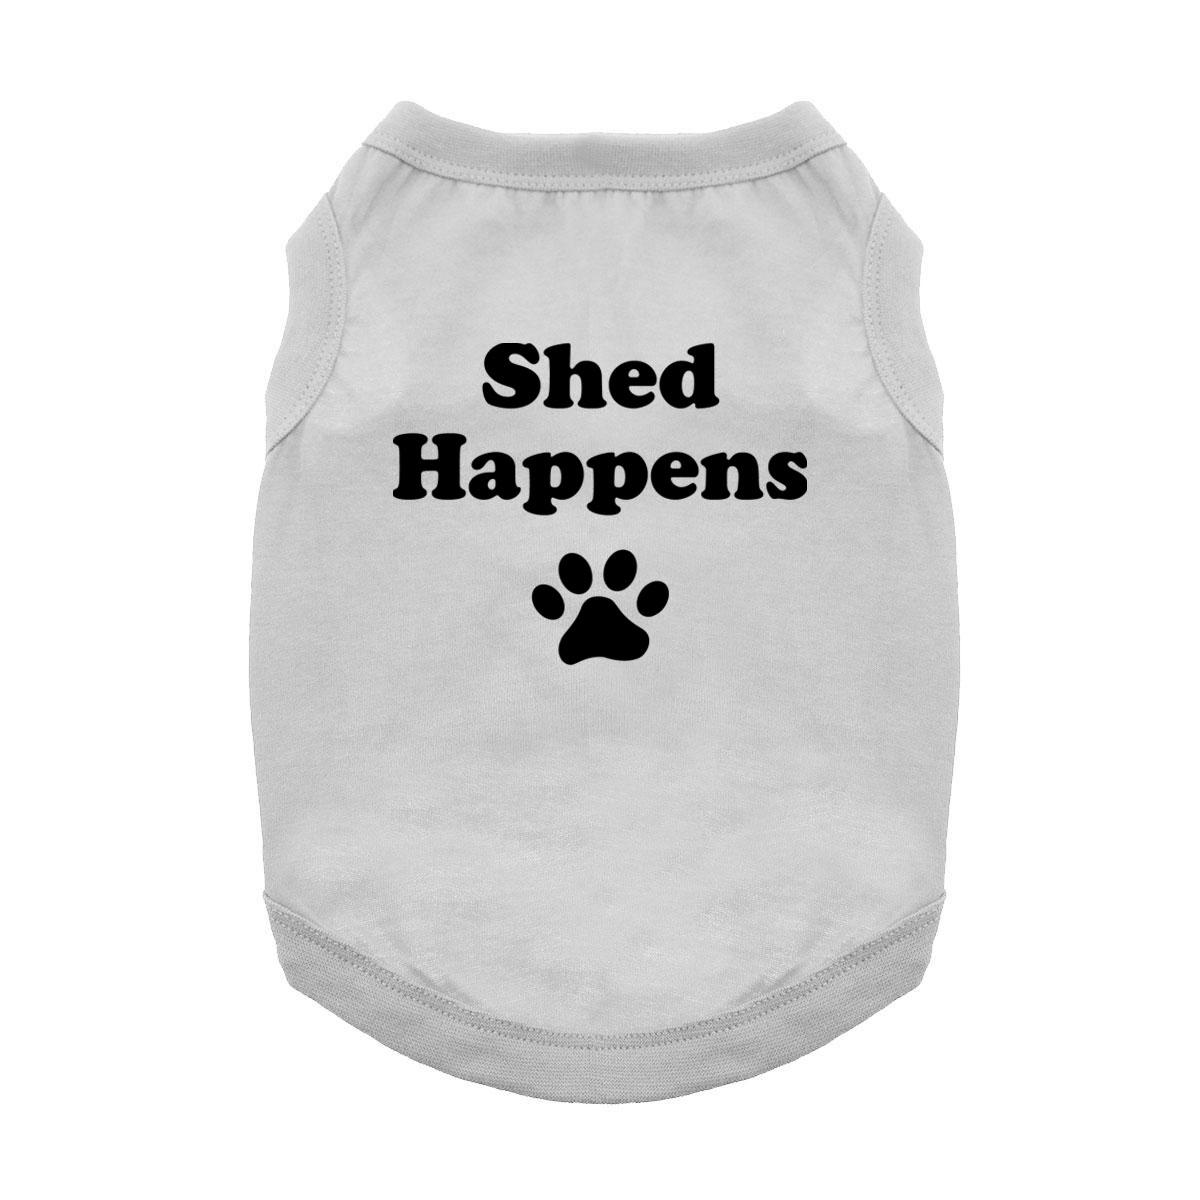 Shed Happens Dog Shirt - Gray